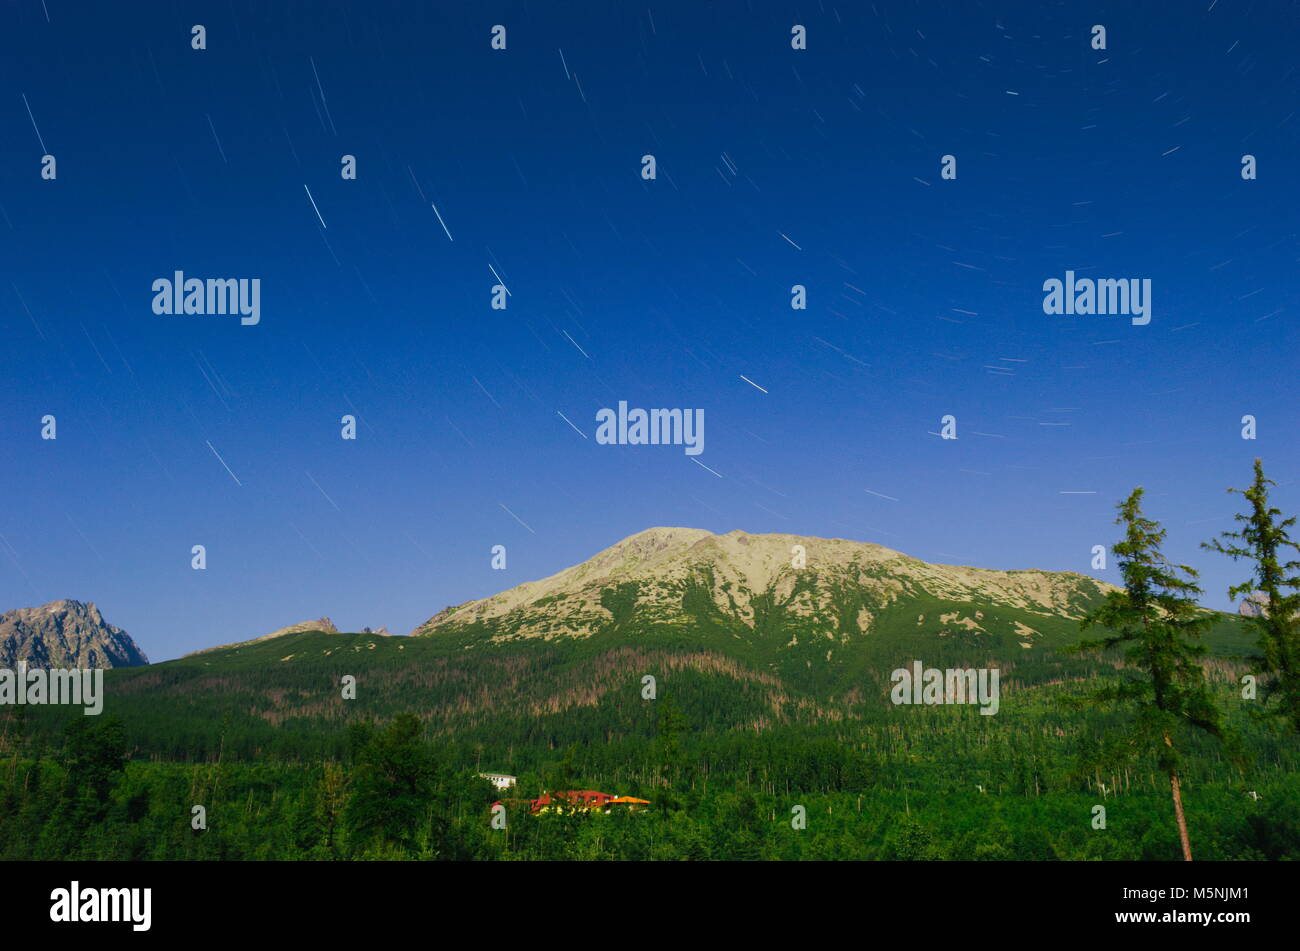 Big Dipper Asterism Ursa Major Constellation Astrophotography over Slavkovsky Stit Mountain Peak in High Tatras Slovakia Stock Photo